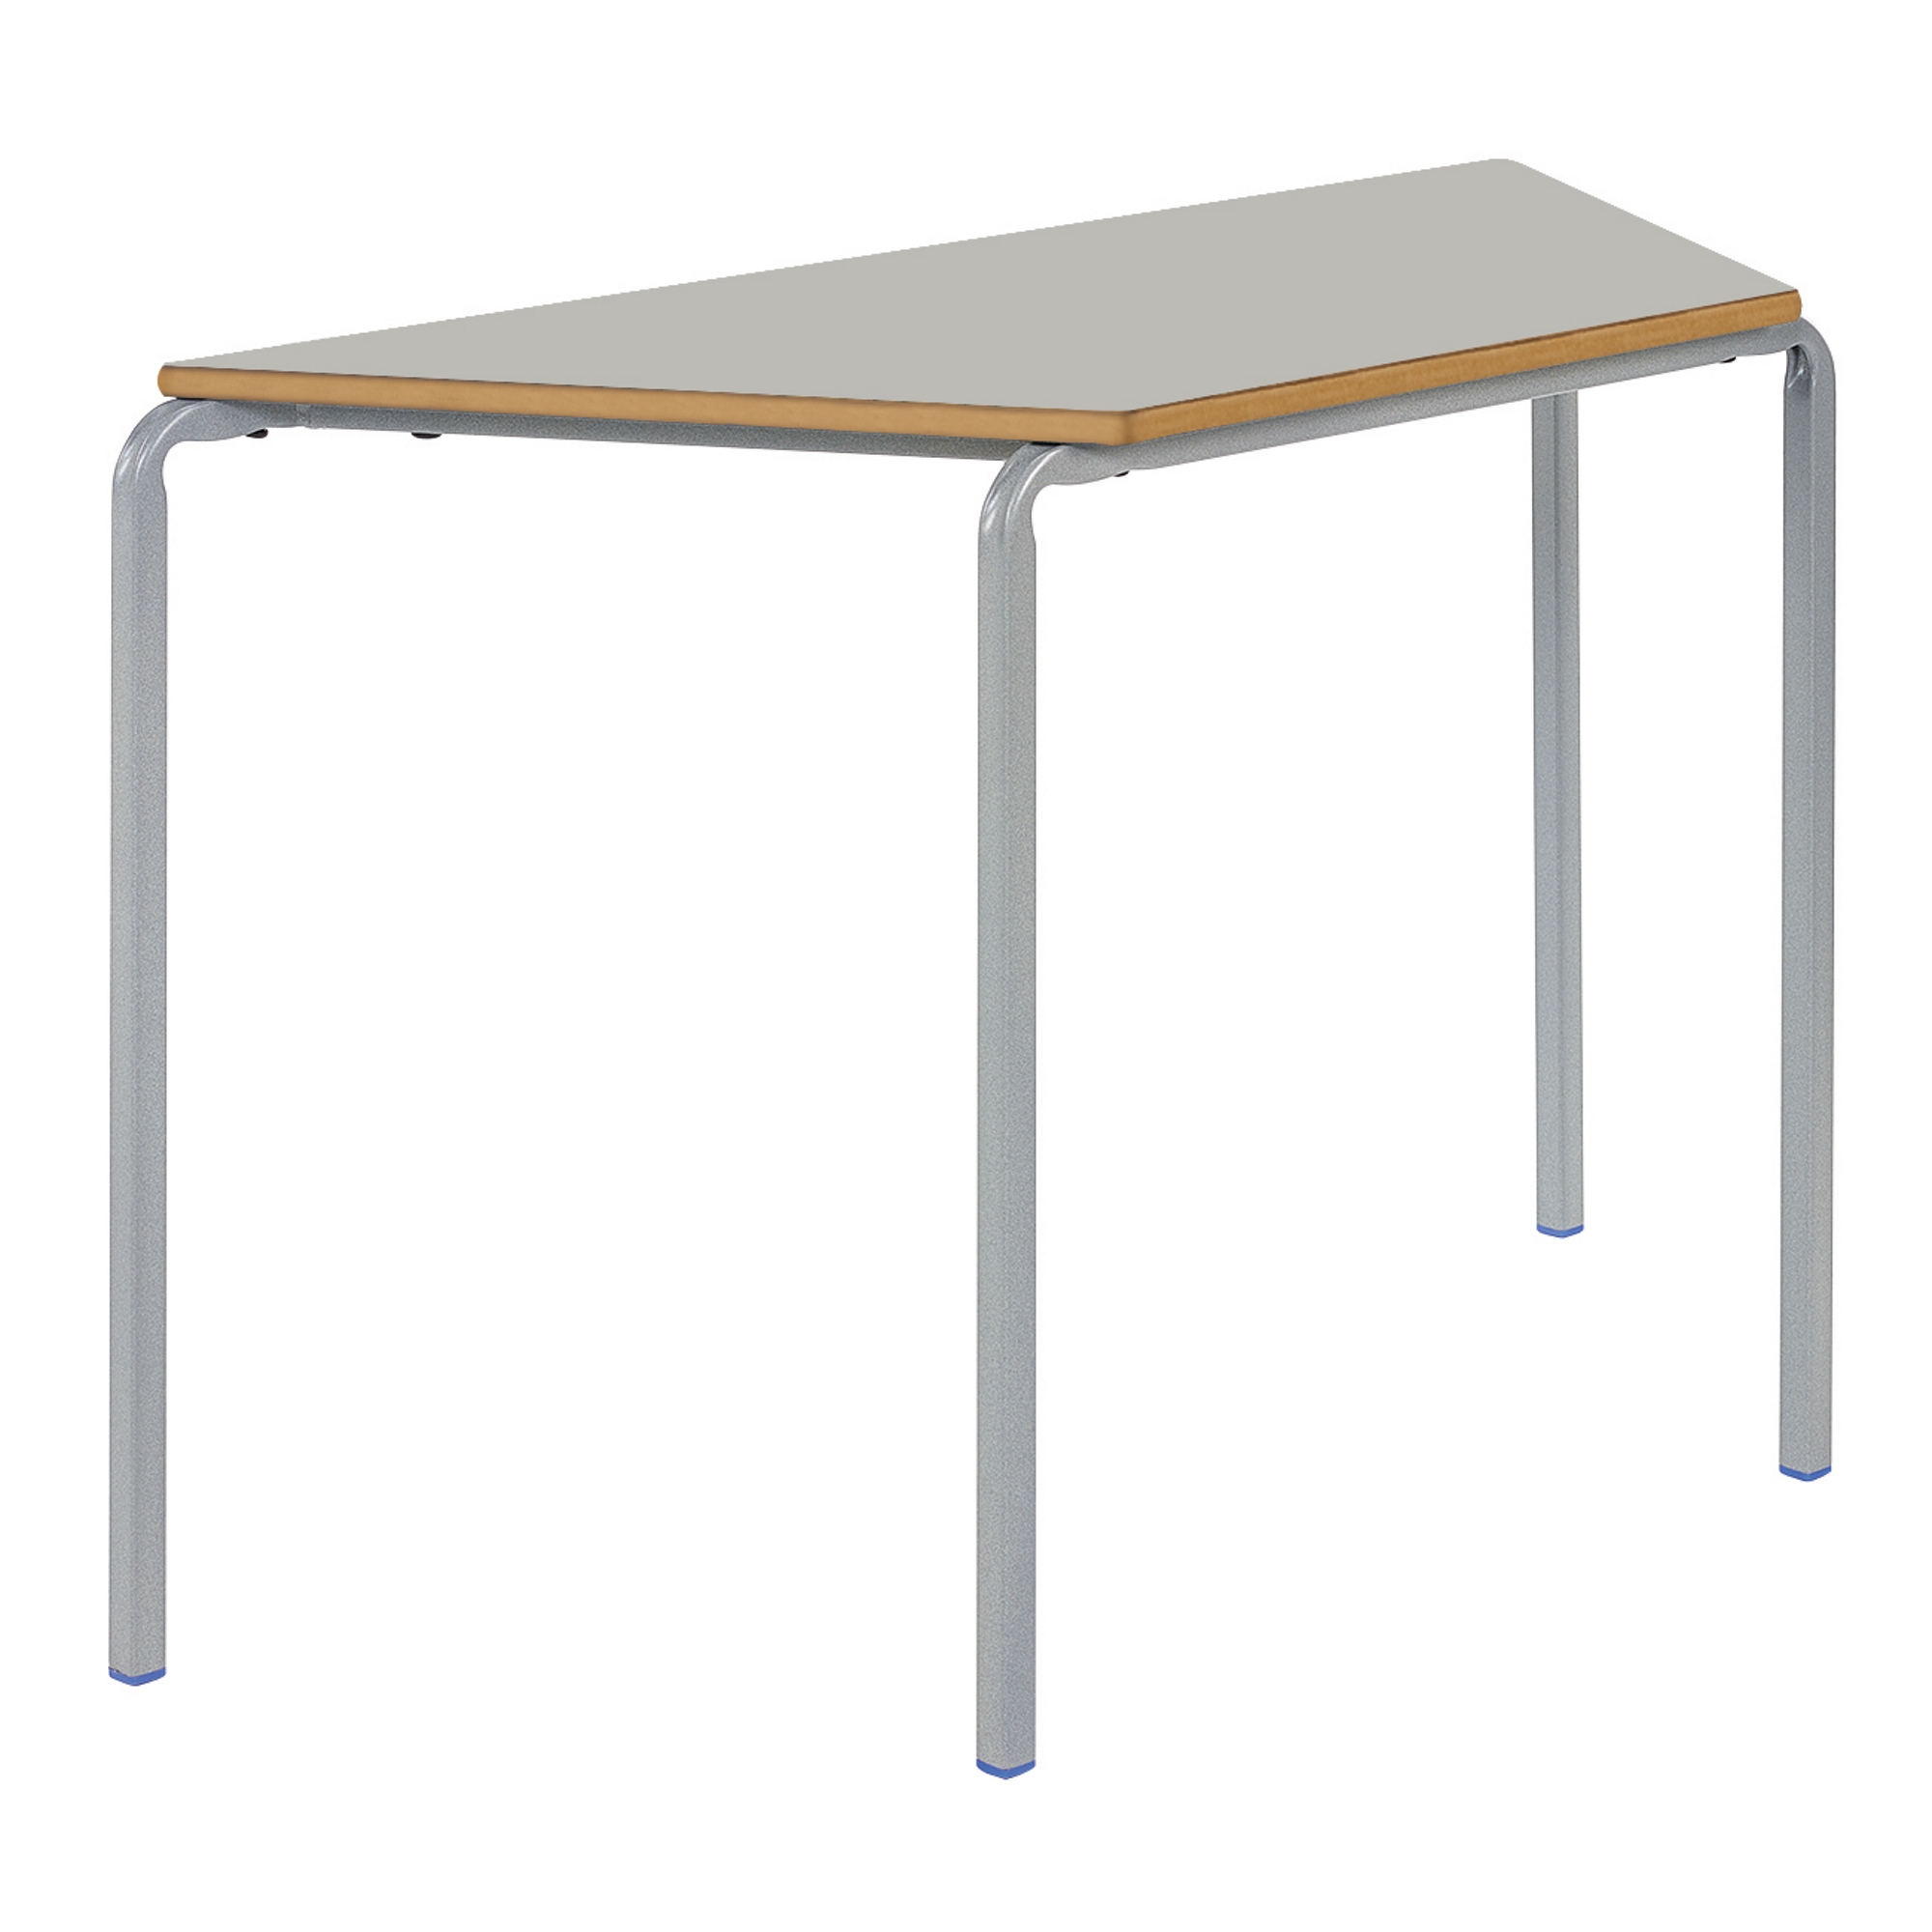 Classmates Trapezoidal Crushed Bent Classroom Table - 1100 x 550 x 640mm - Grey